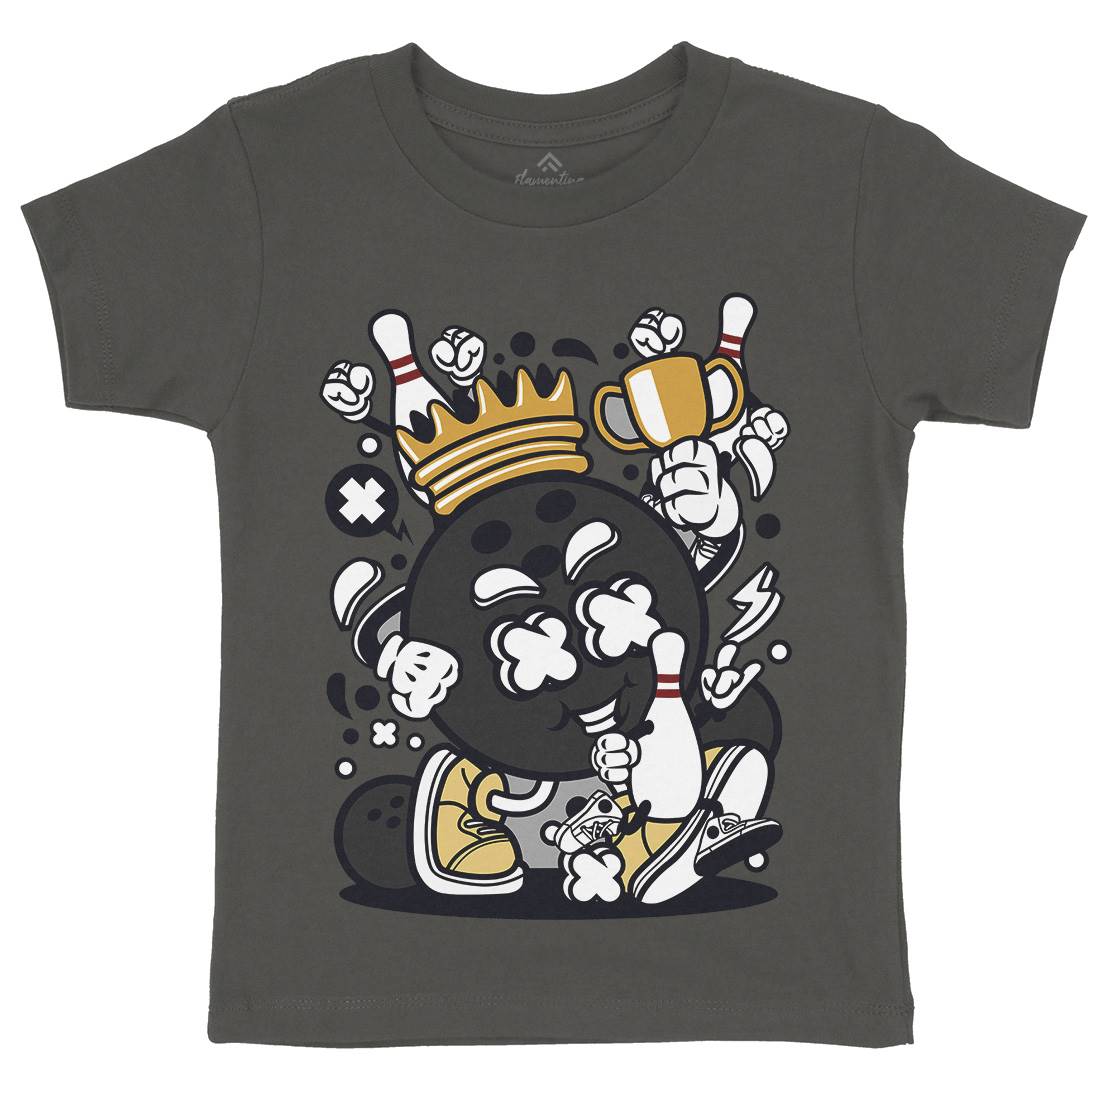 Bowling King Kids Crew Neck T-Shirt Sport C032